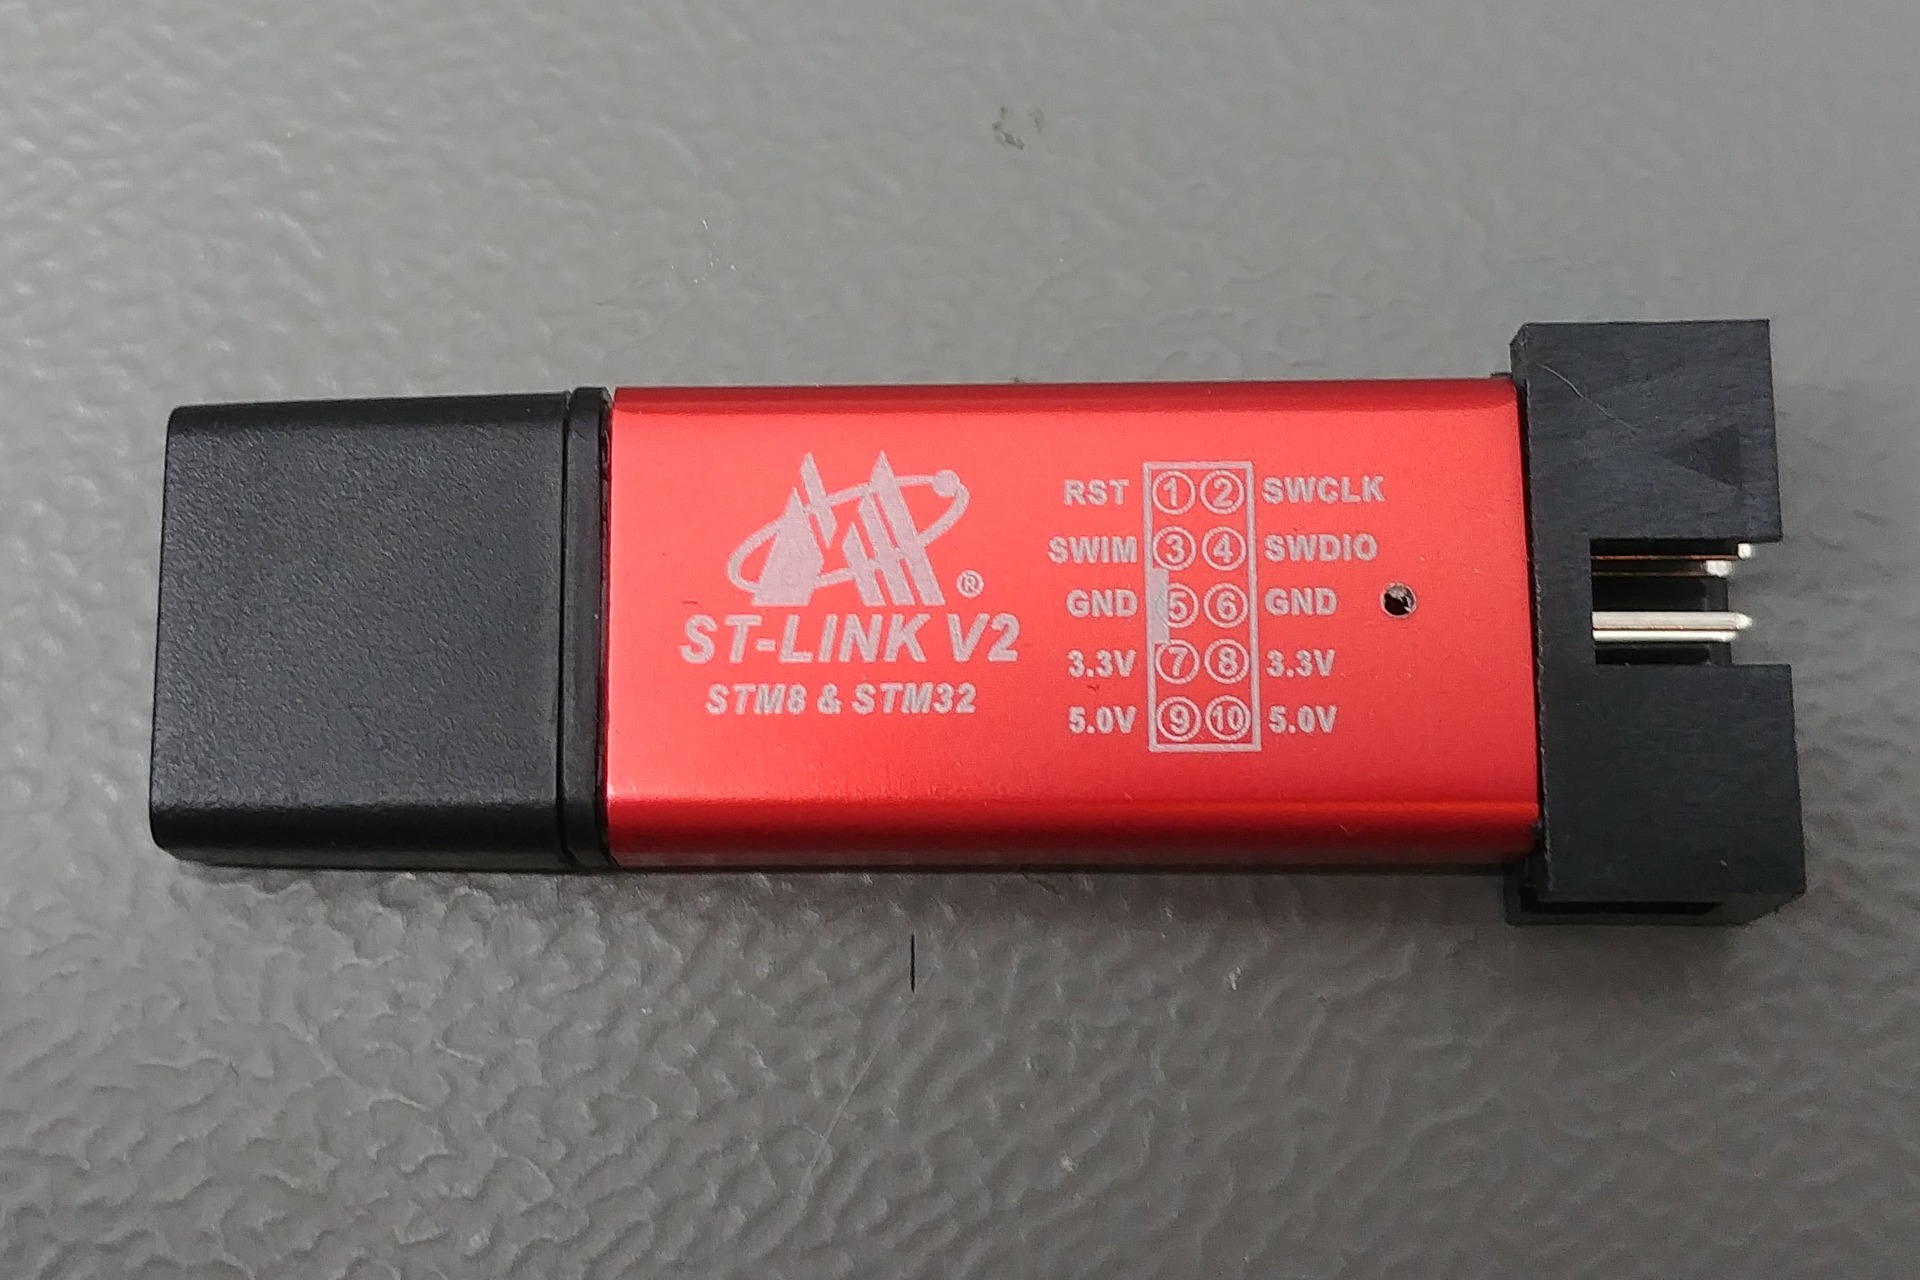 Picture of the ST-LINK V2 Debugger